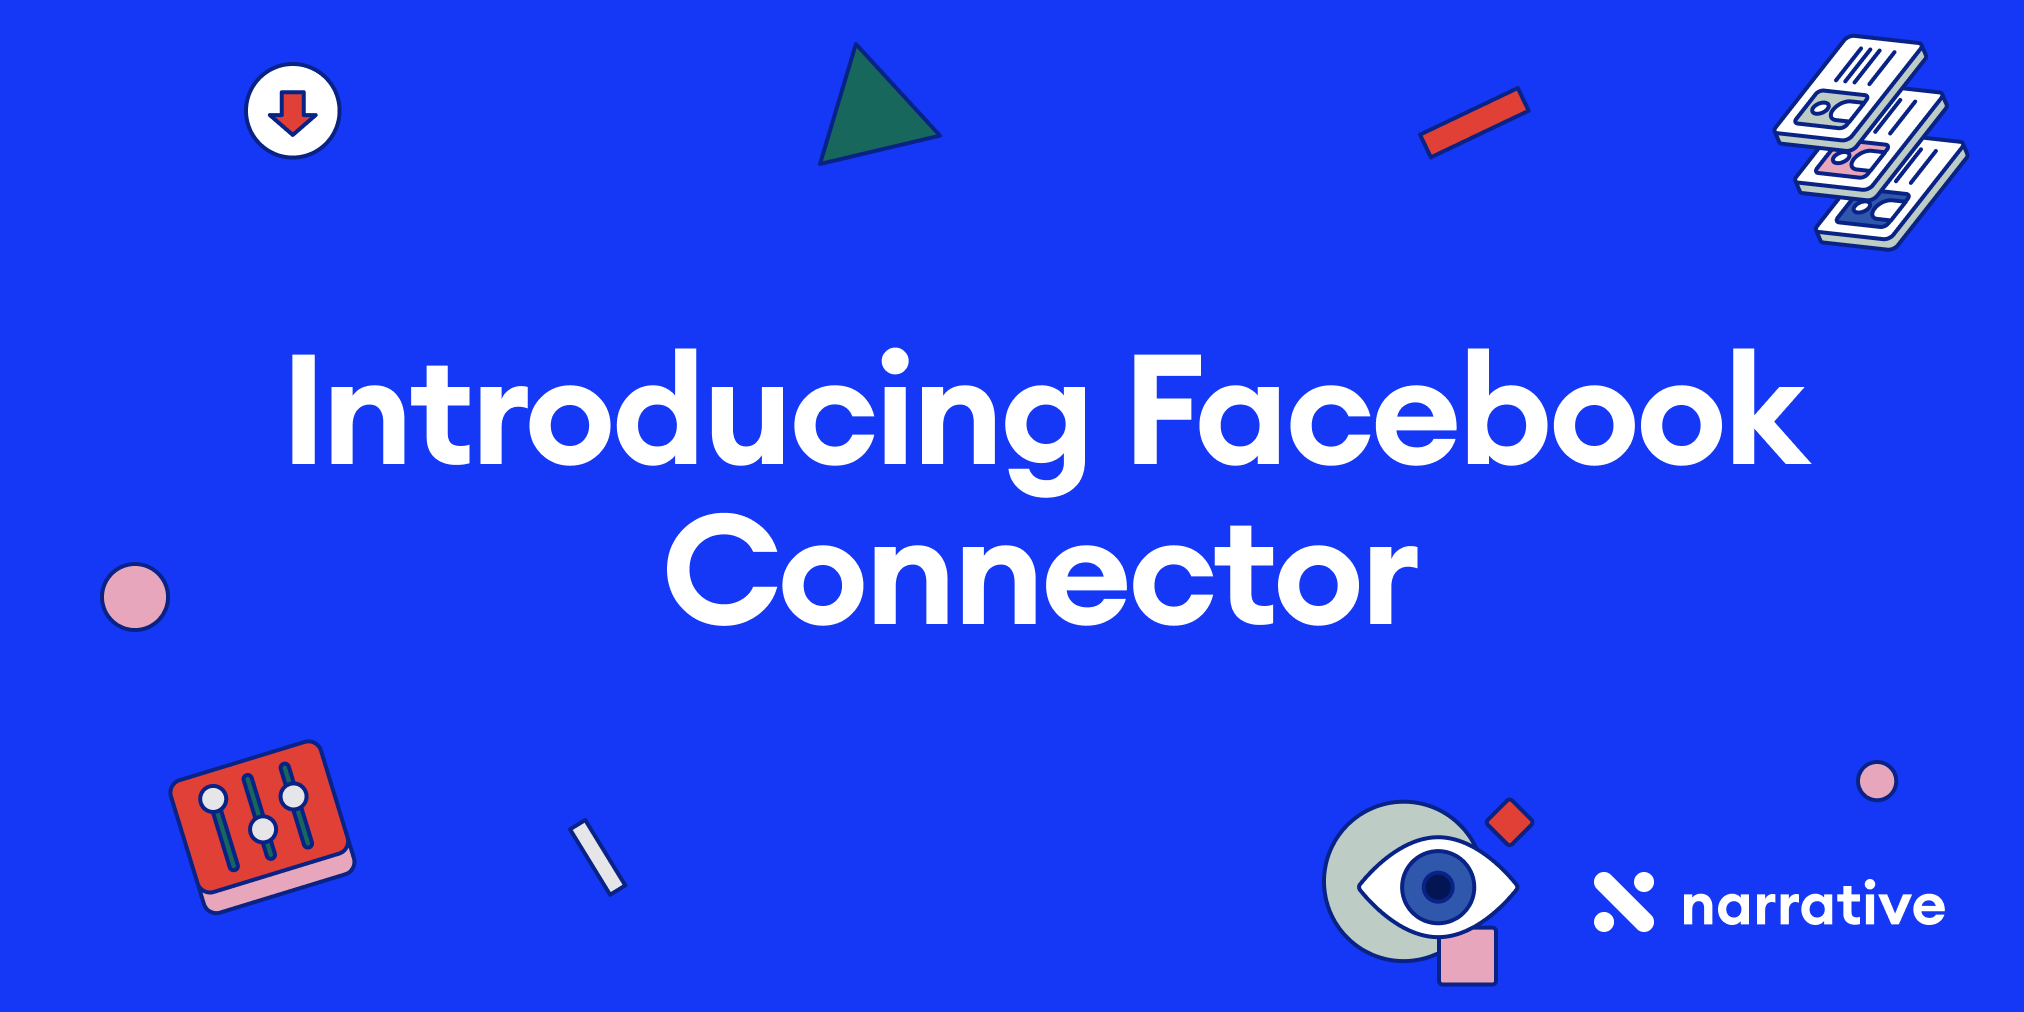 Introducing Facebook Connector